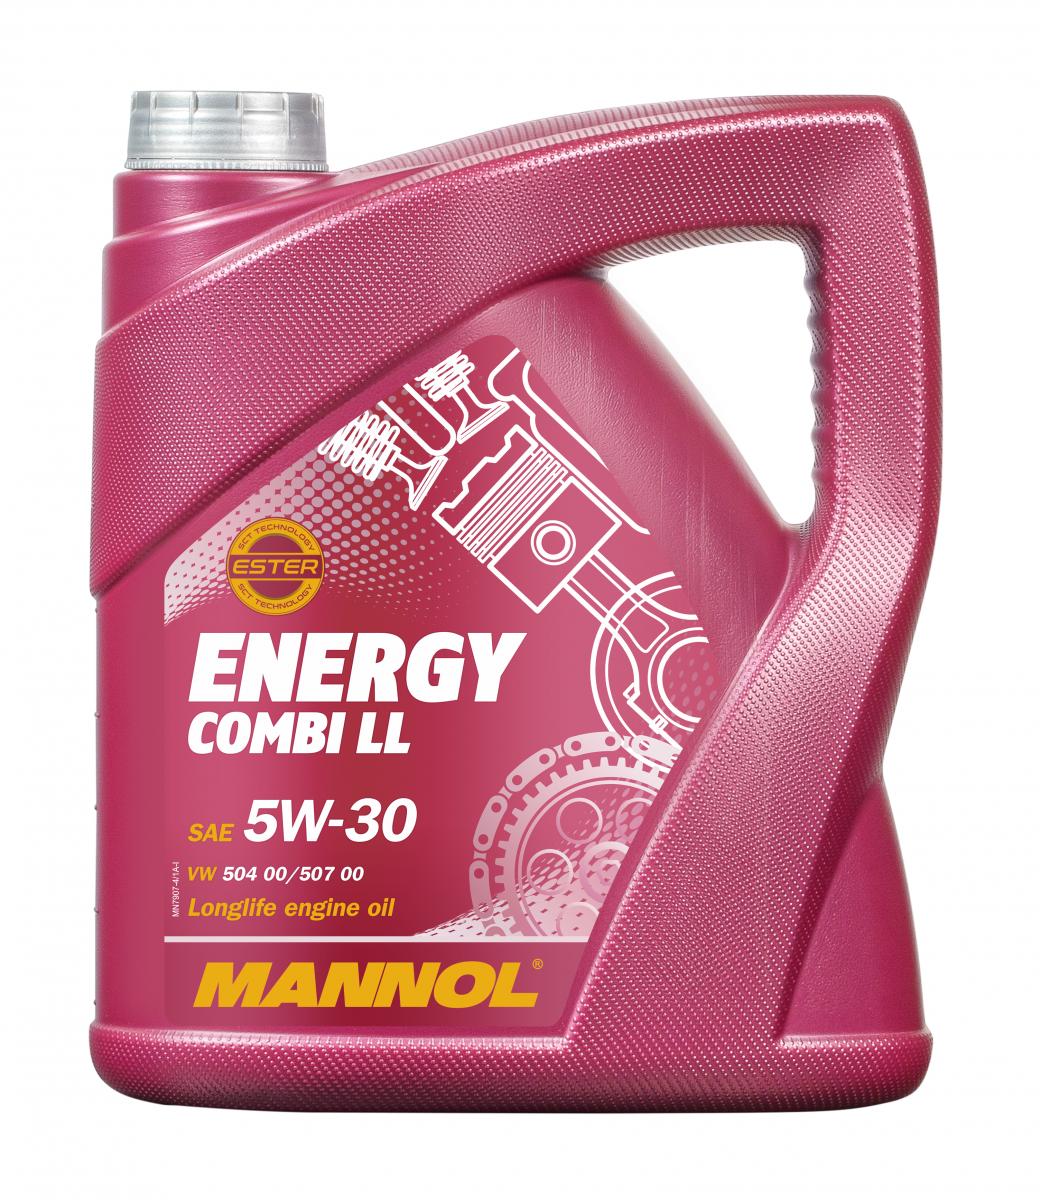 Mannol Energy Combi LL 5W-30 (5L)